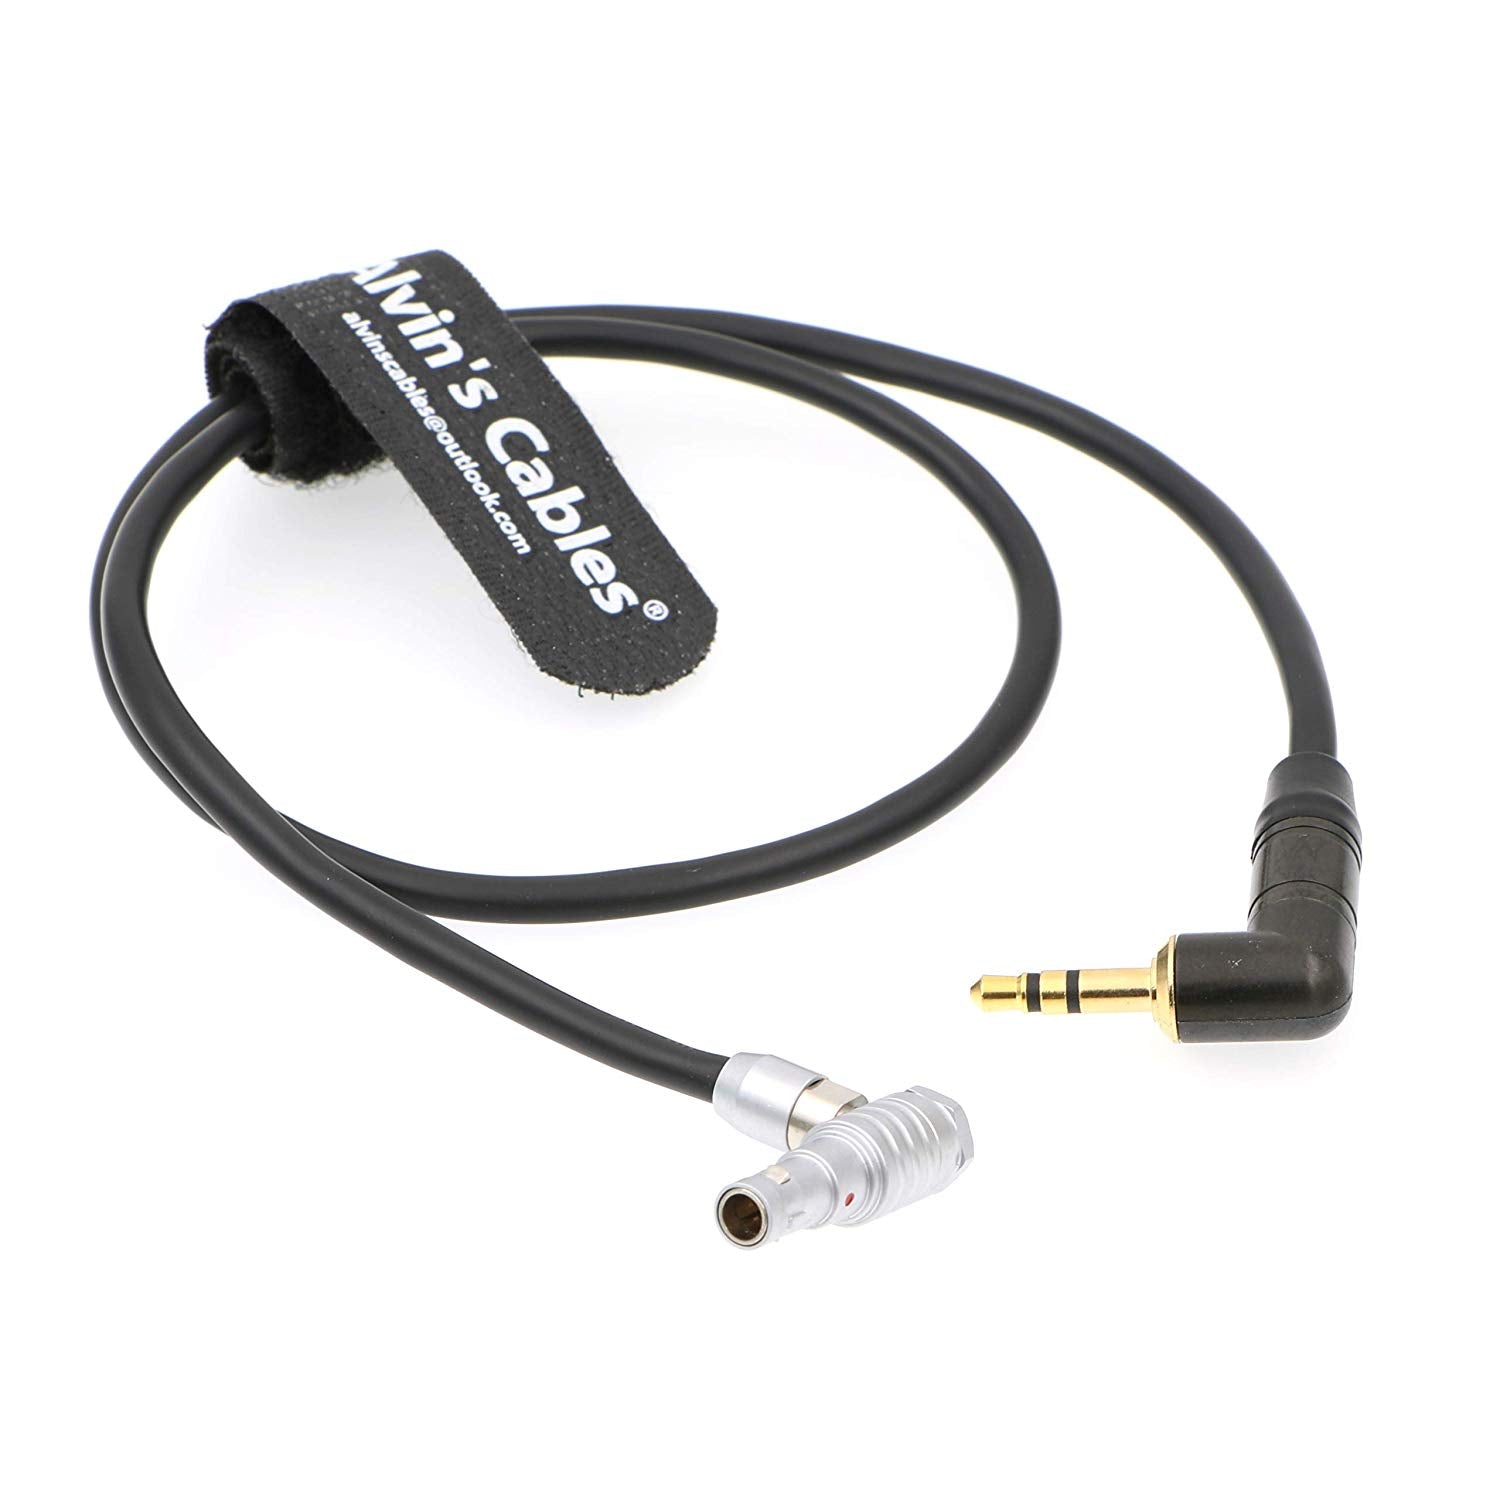 Alvin's Cables Audio Cable for ARRI Alexa Mini Camera 5 Pin Right Angle Male to Right Angle 3.5mm TRS